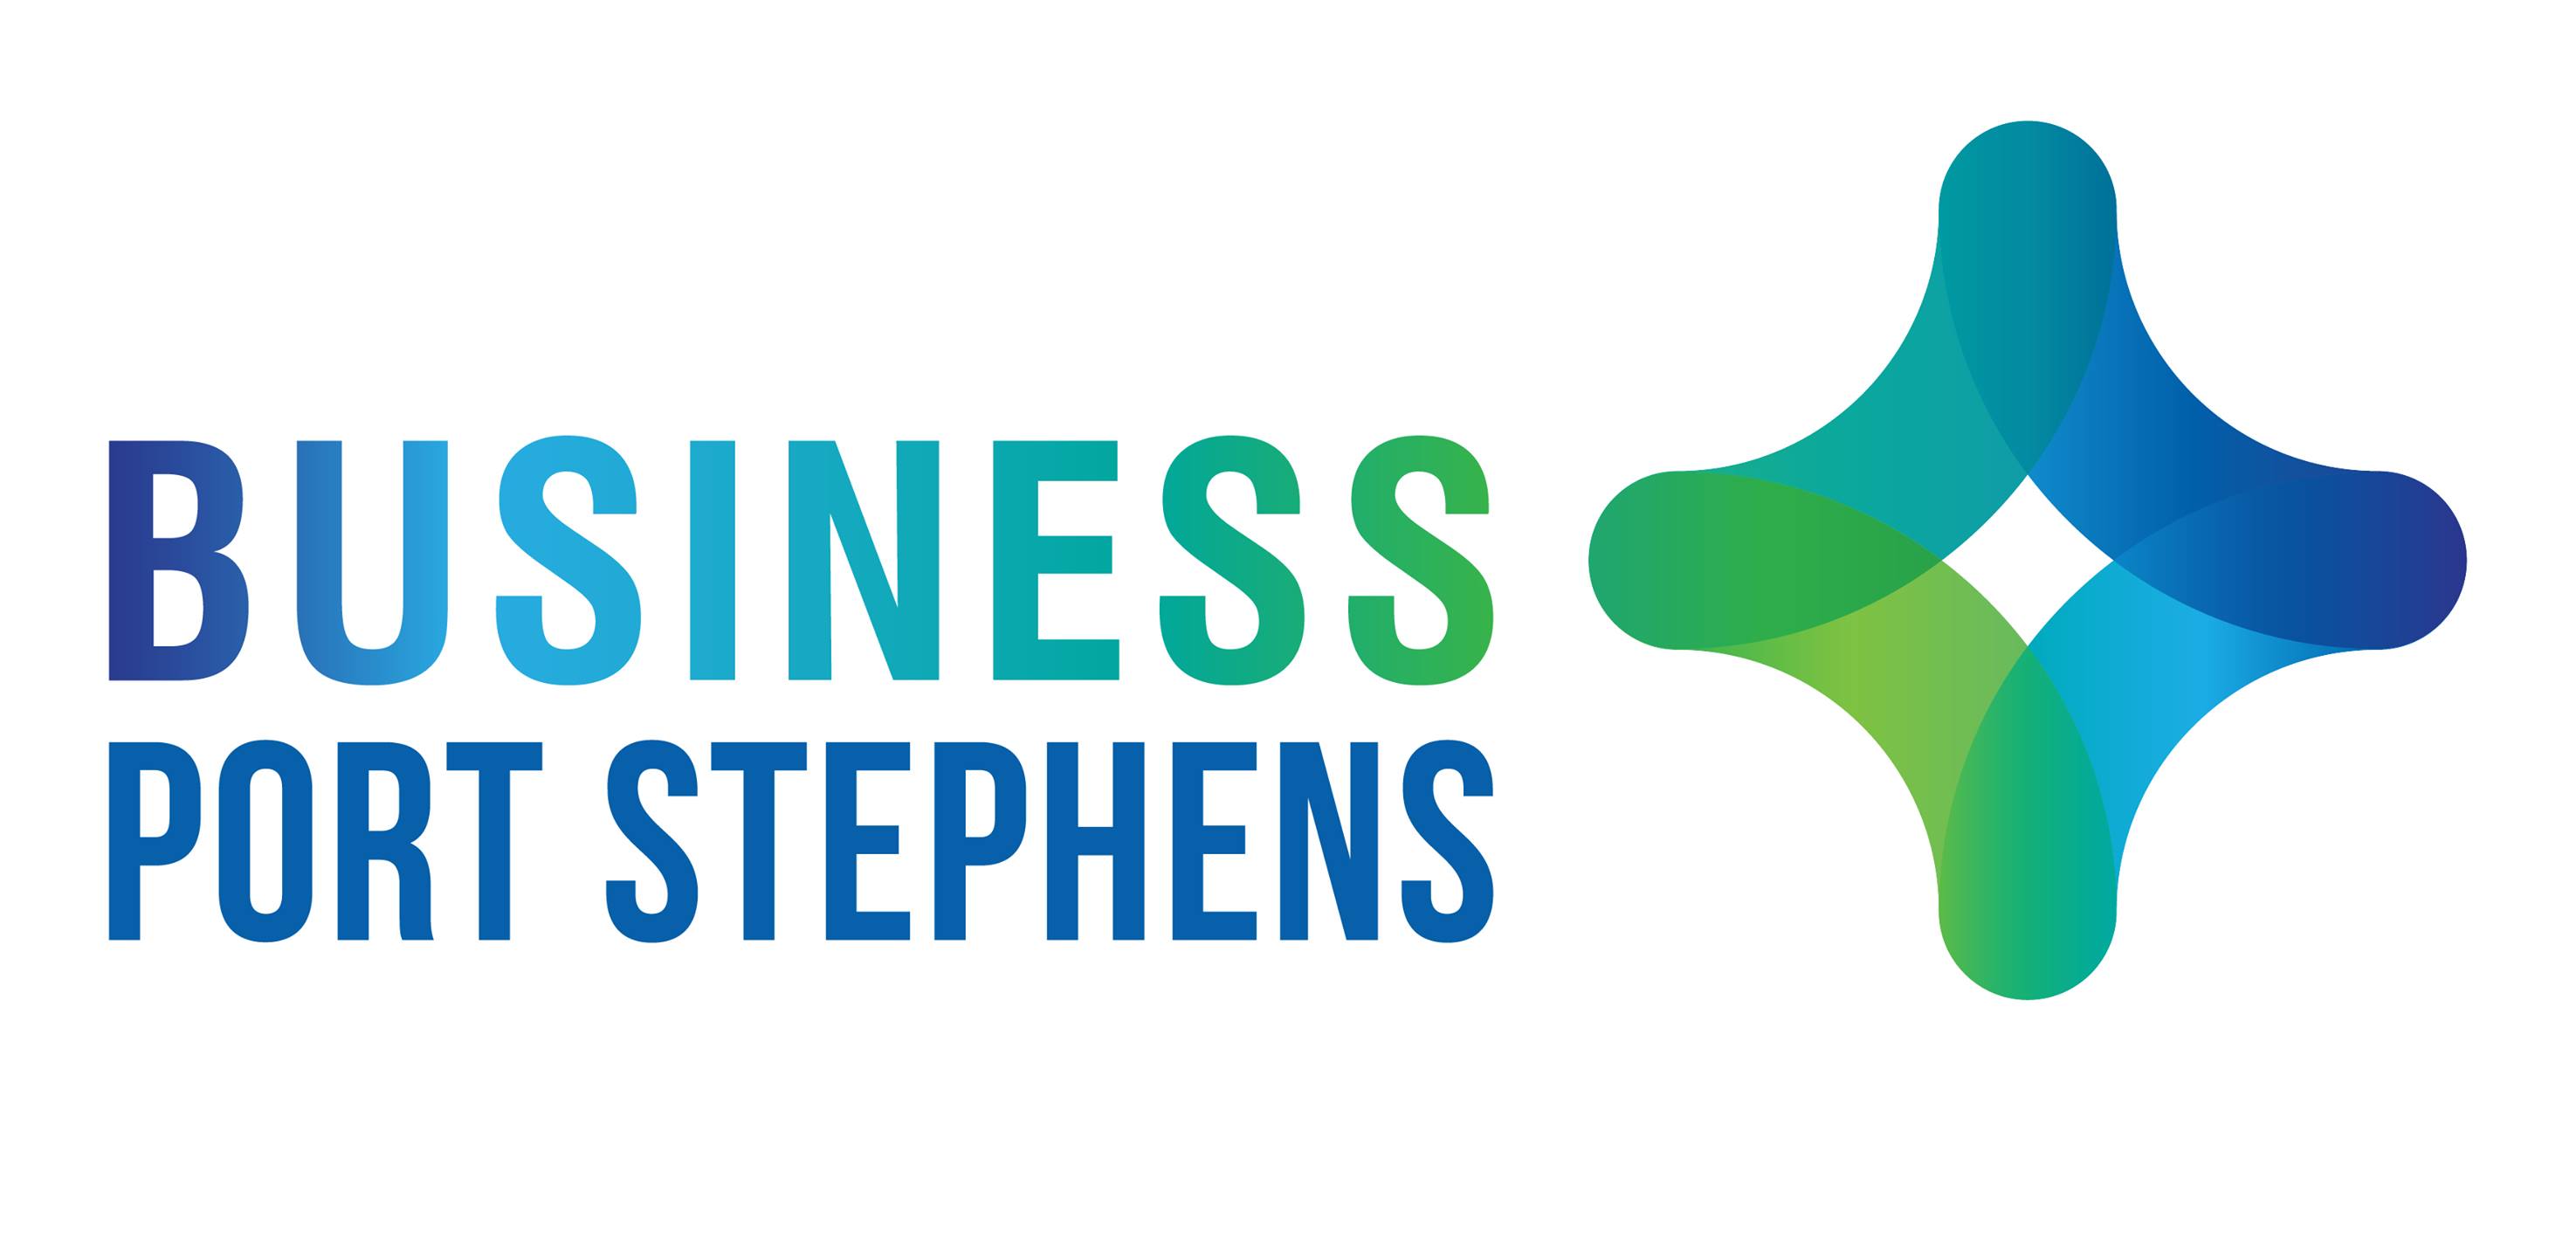 Business Port Stephens